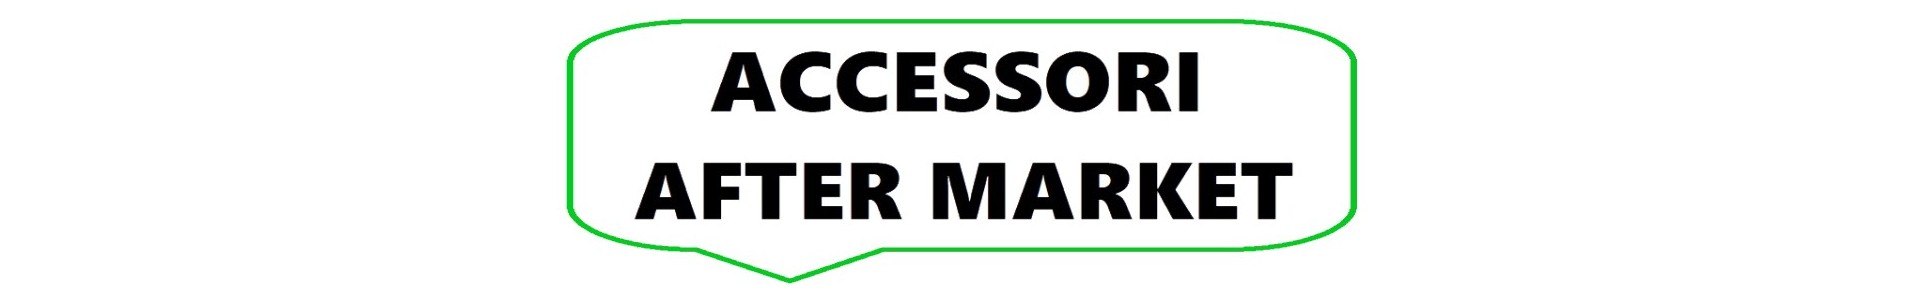 Accessori / After market